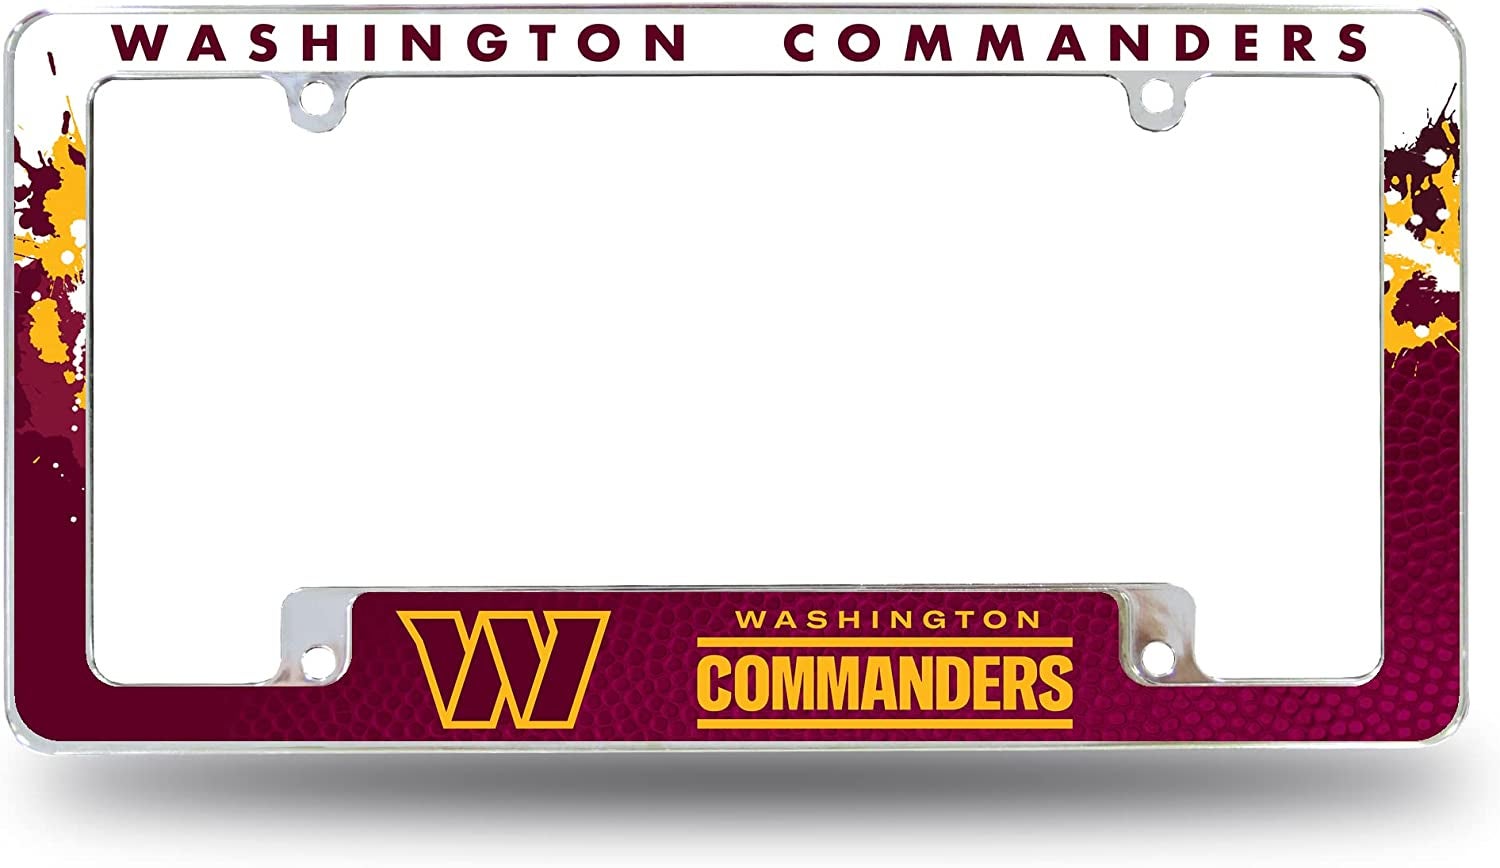 a Washington Commanders license plate frame